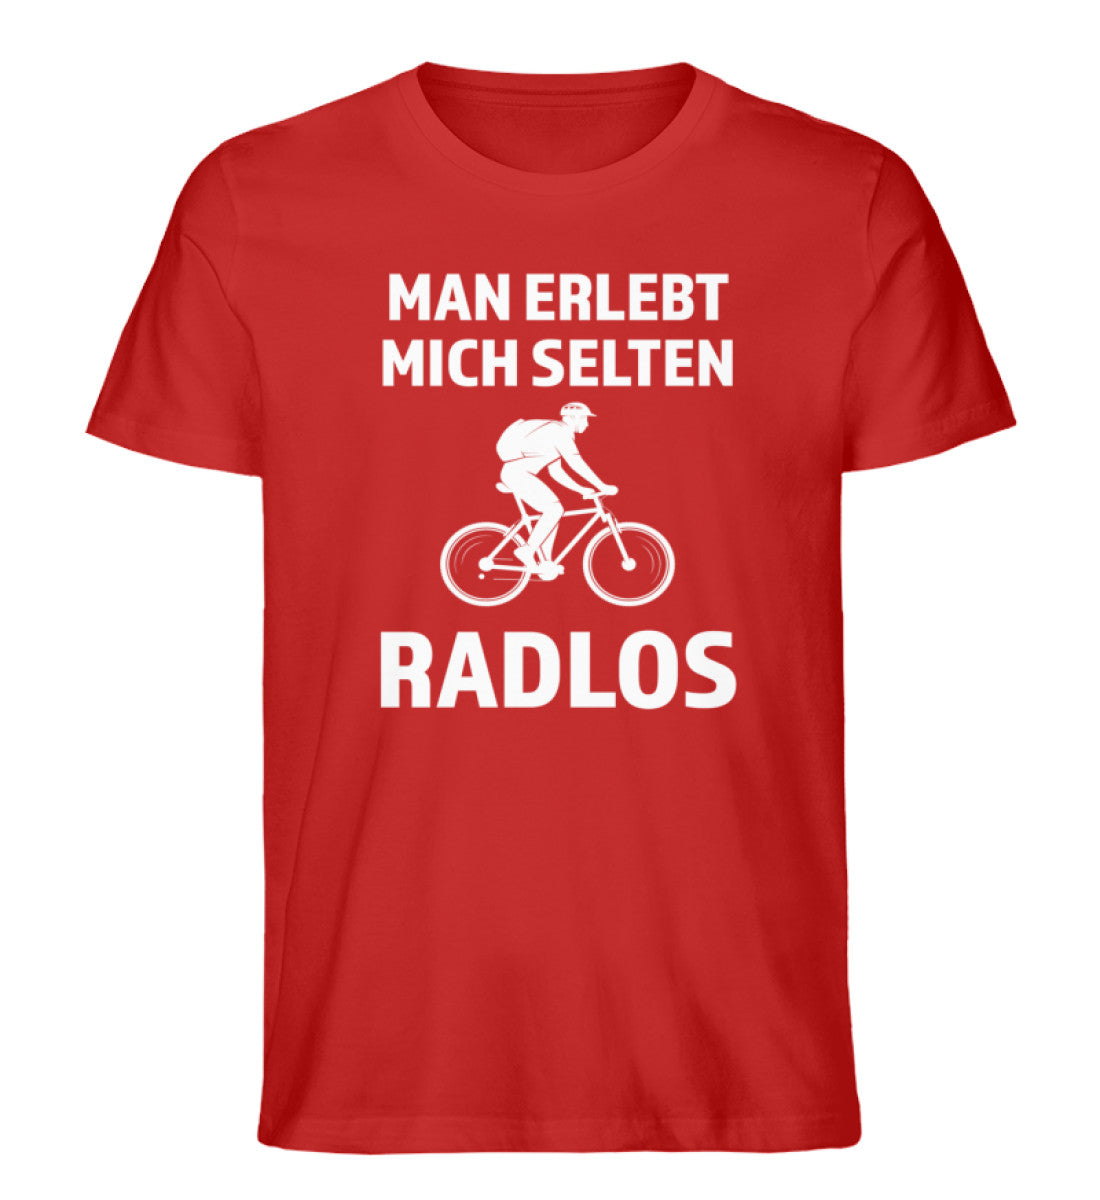 Man erlebt mich selten radlos - Herren Organic T-Shirt fahrrad mountainbike Rot